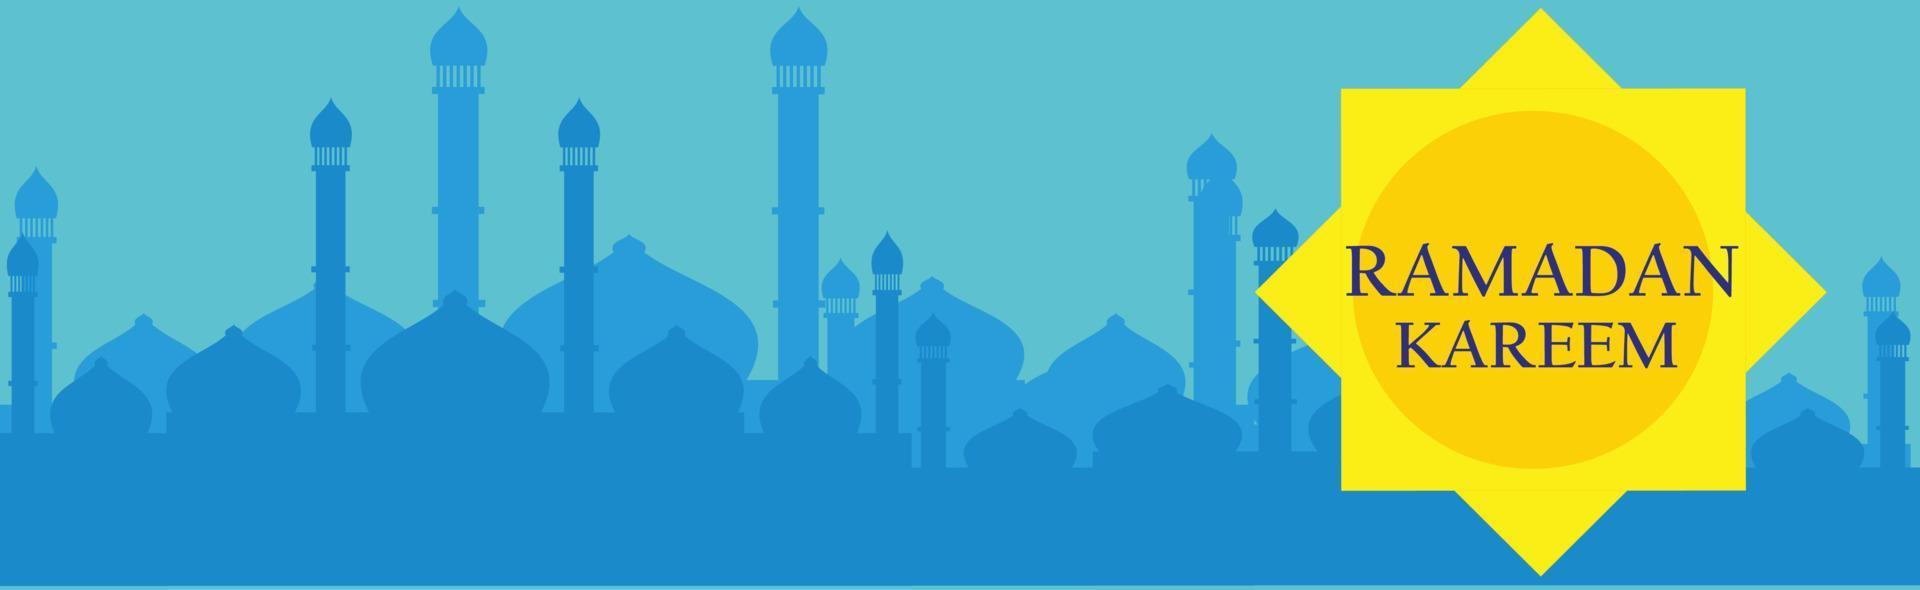 ramadan kareem greeting designs. blue abstract mosque background. ramadan templates vector